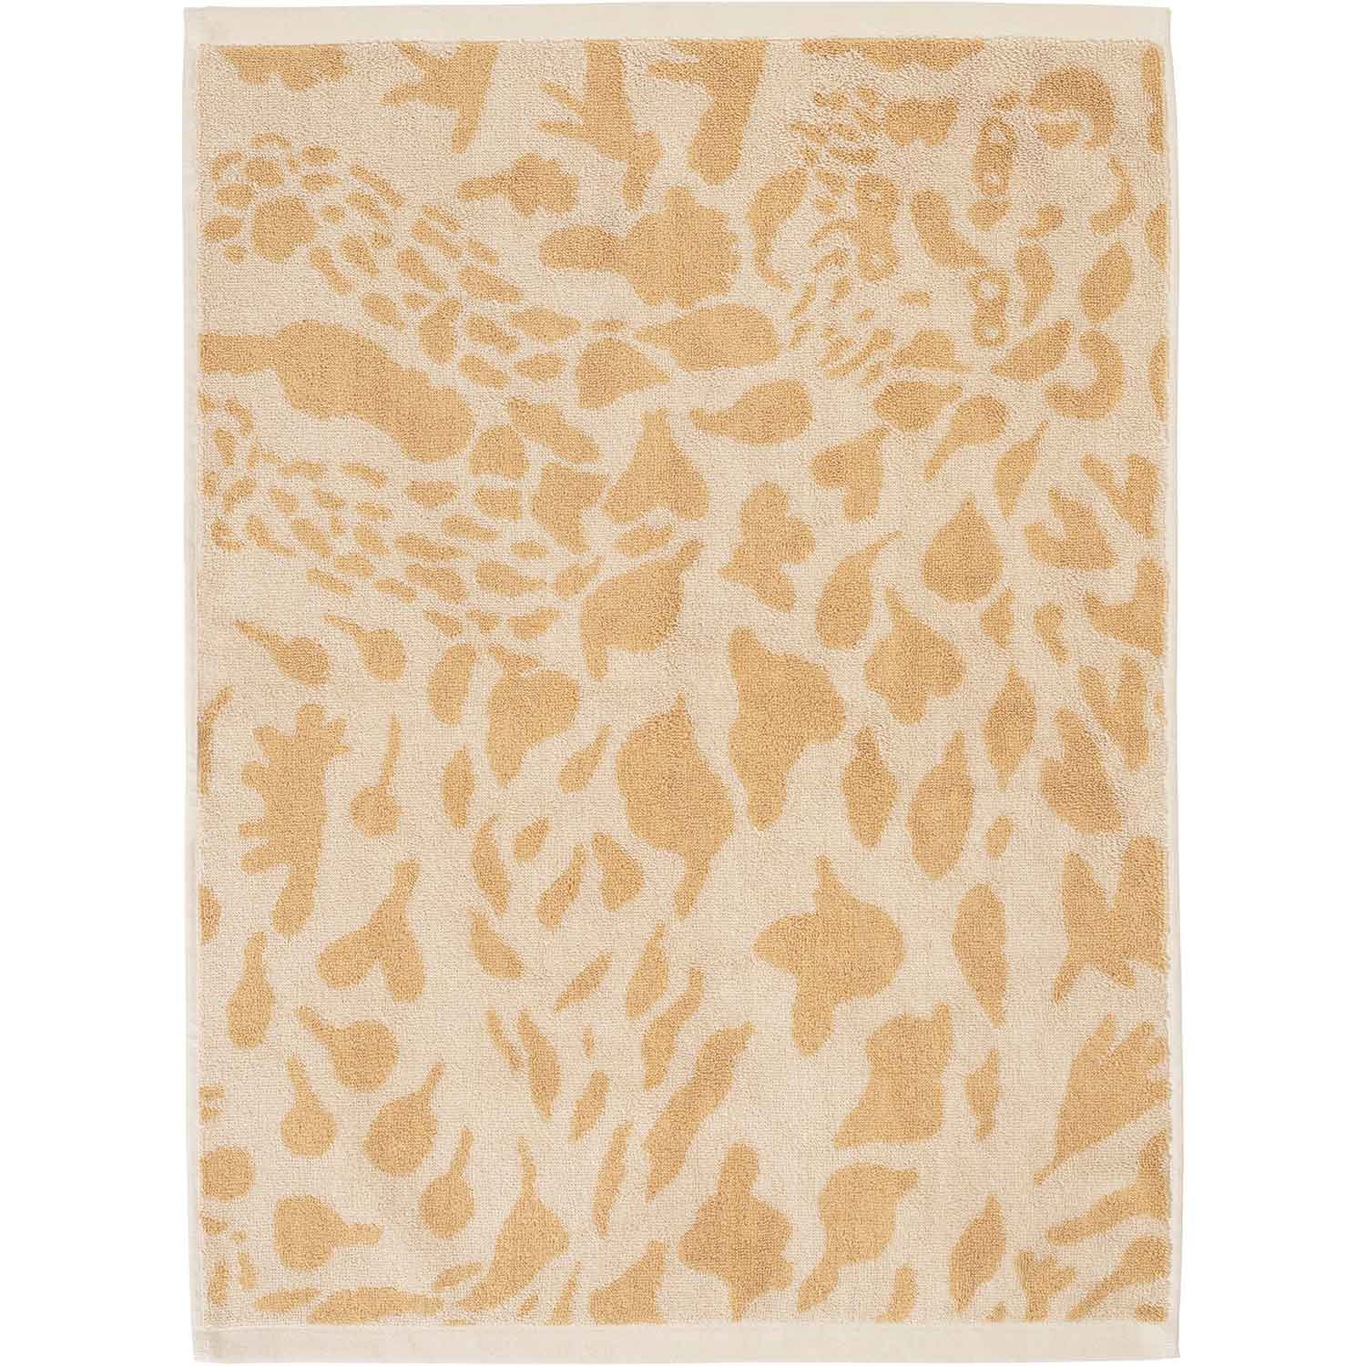 Oiva Toikka Collection Towel, 50x70 cm, Cheetah Brown